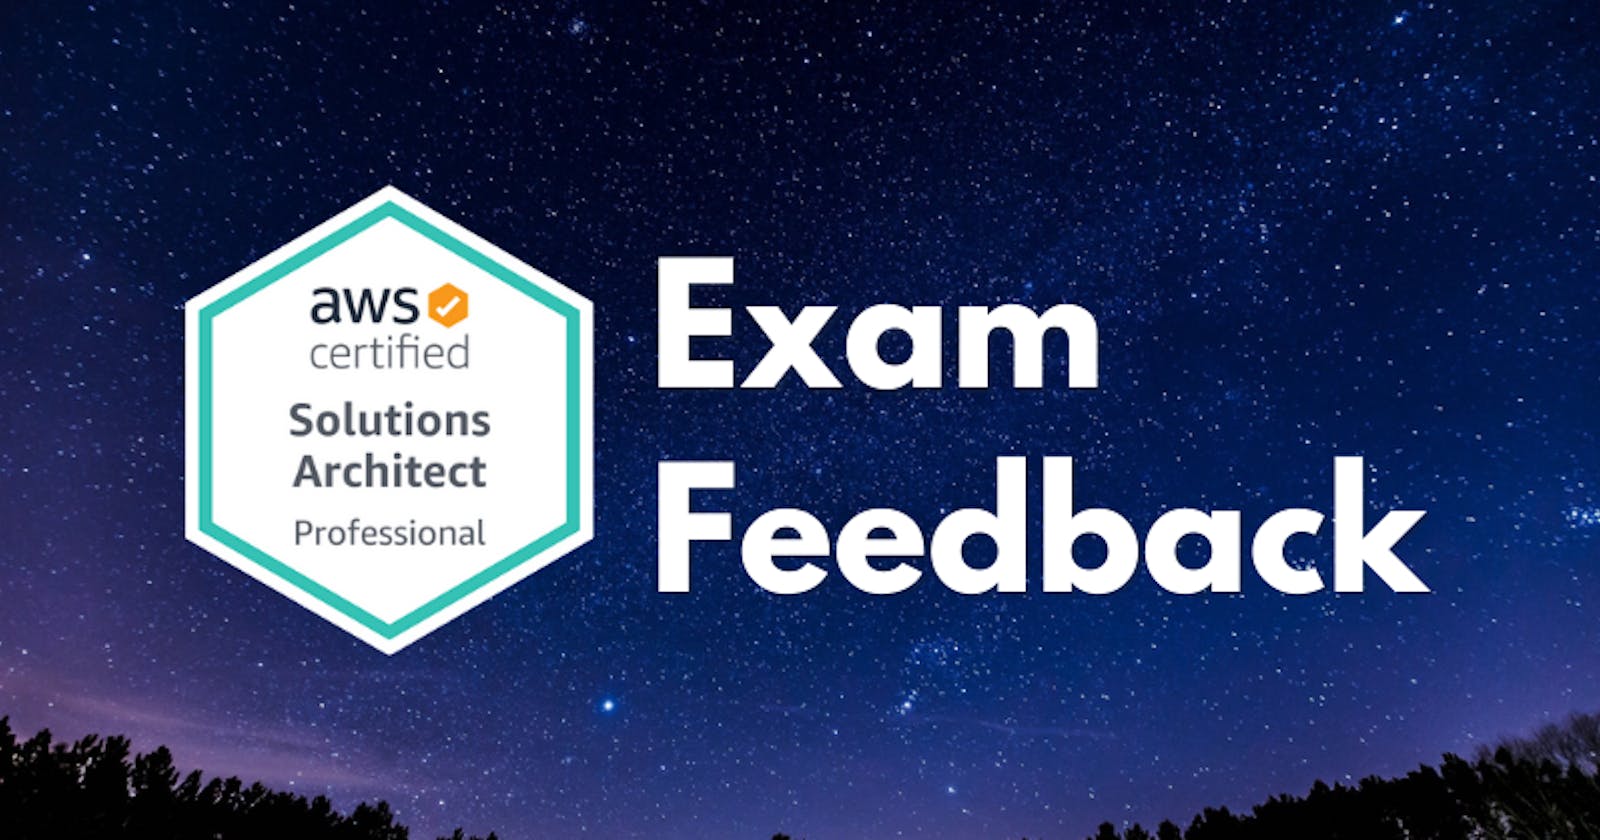 AWS Solutions Architect Professional Exam Feedback